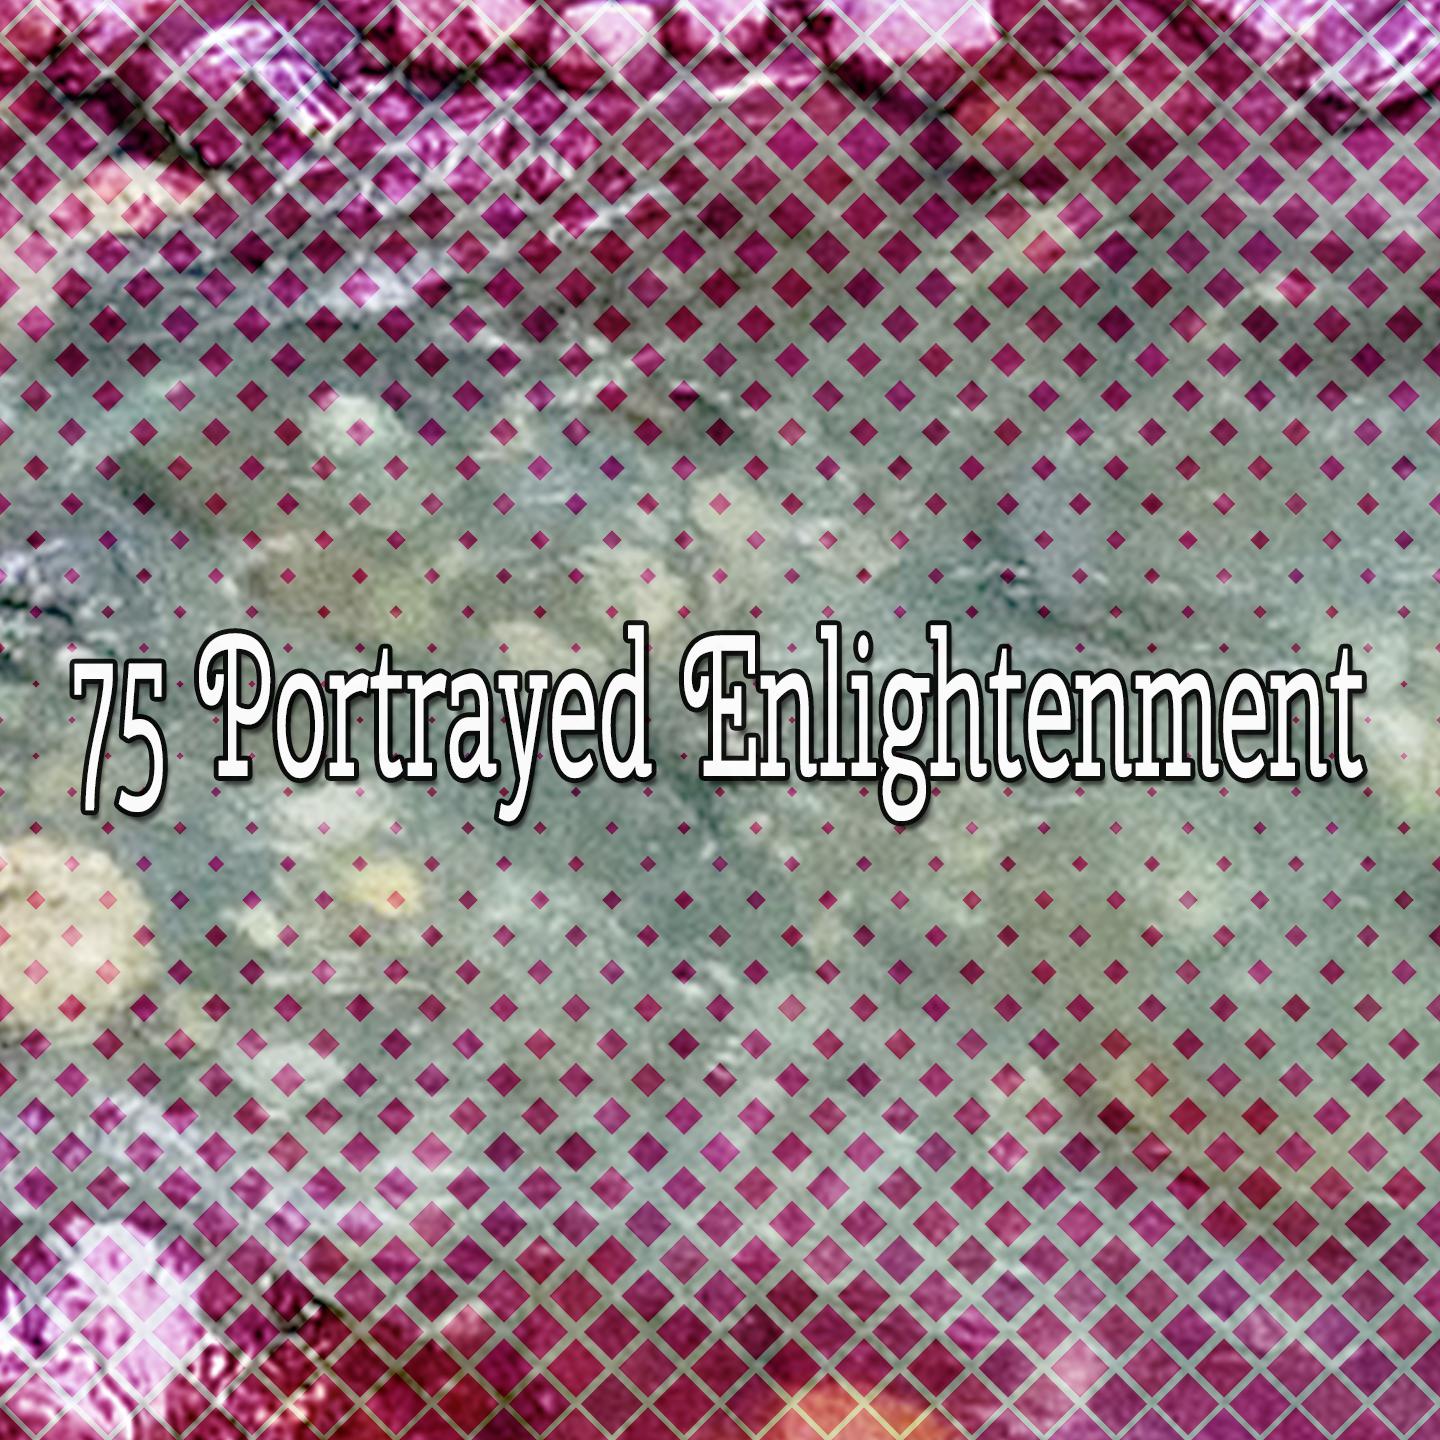 75 Portrayed Enlightenment